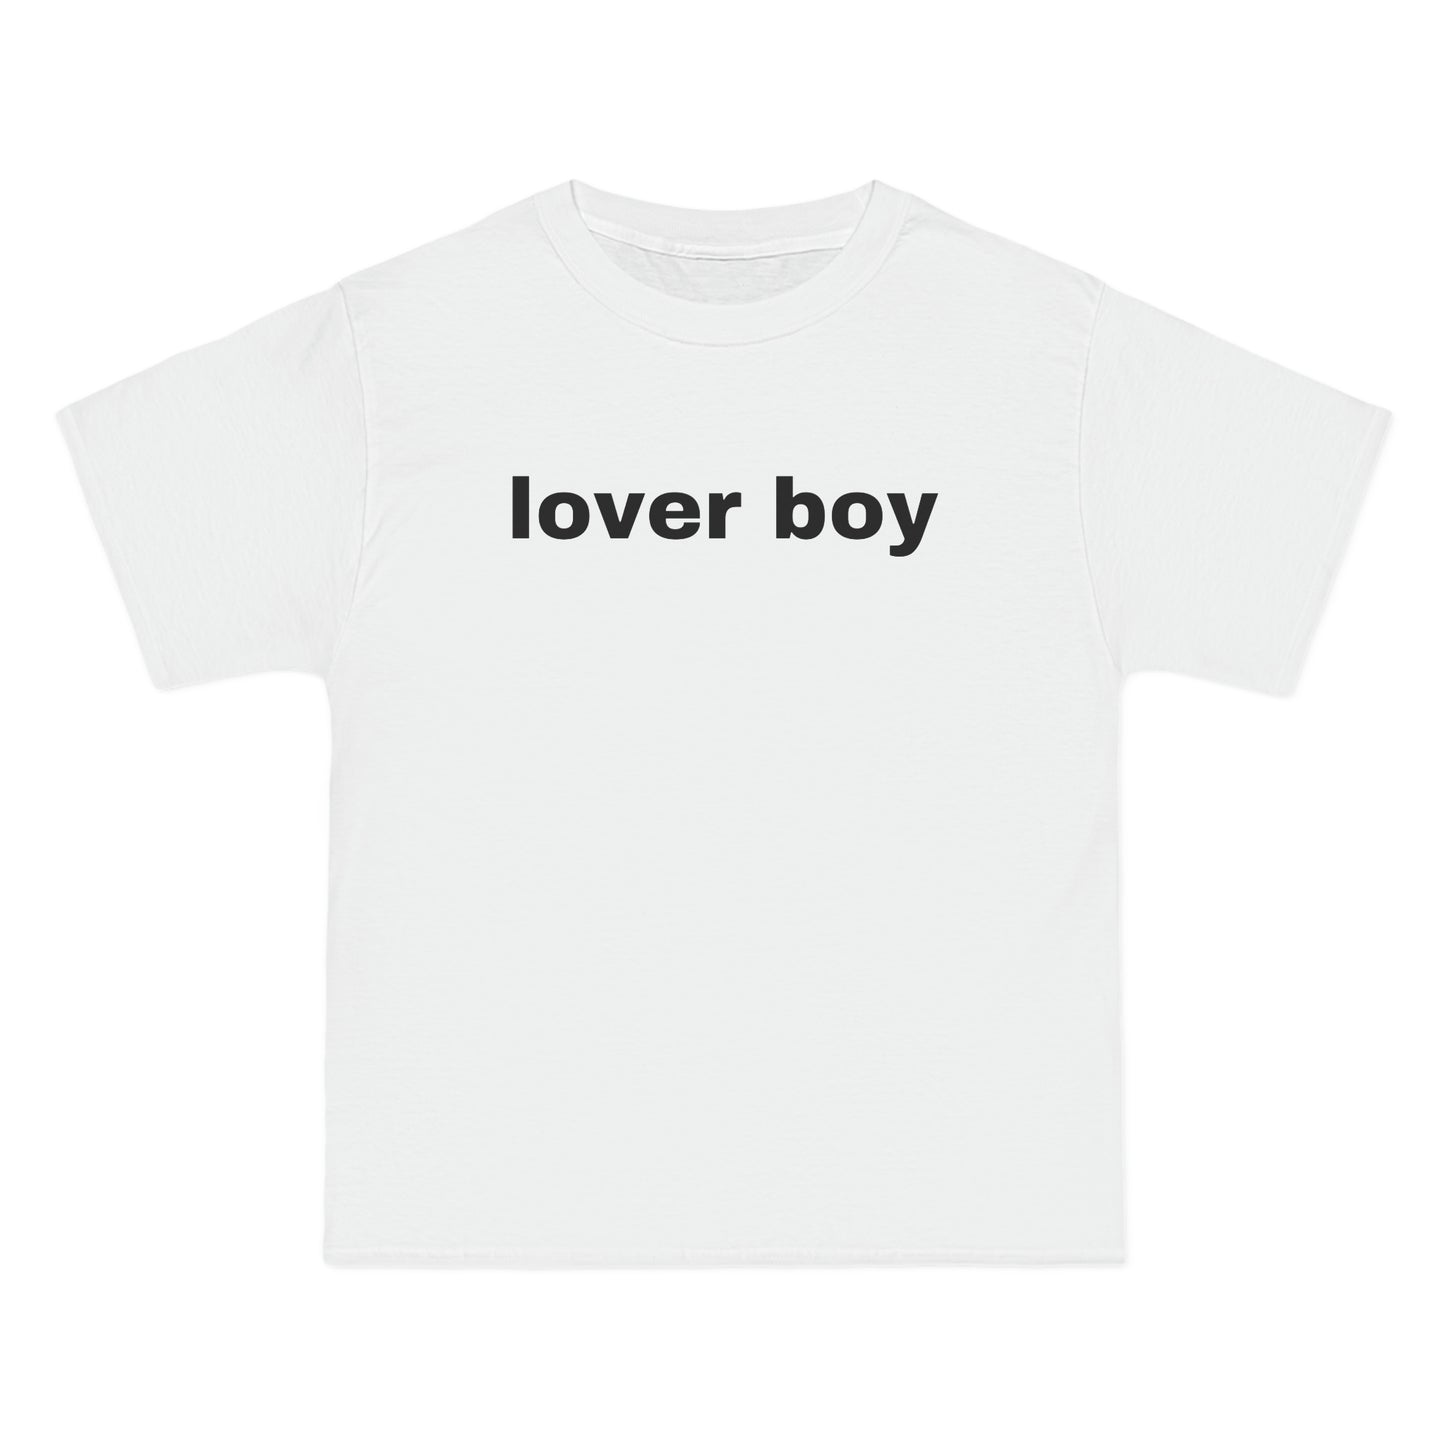 lover boy Tee